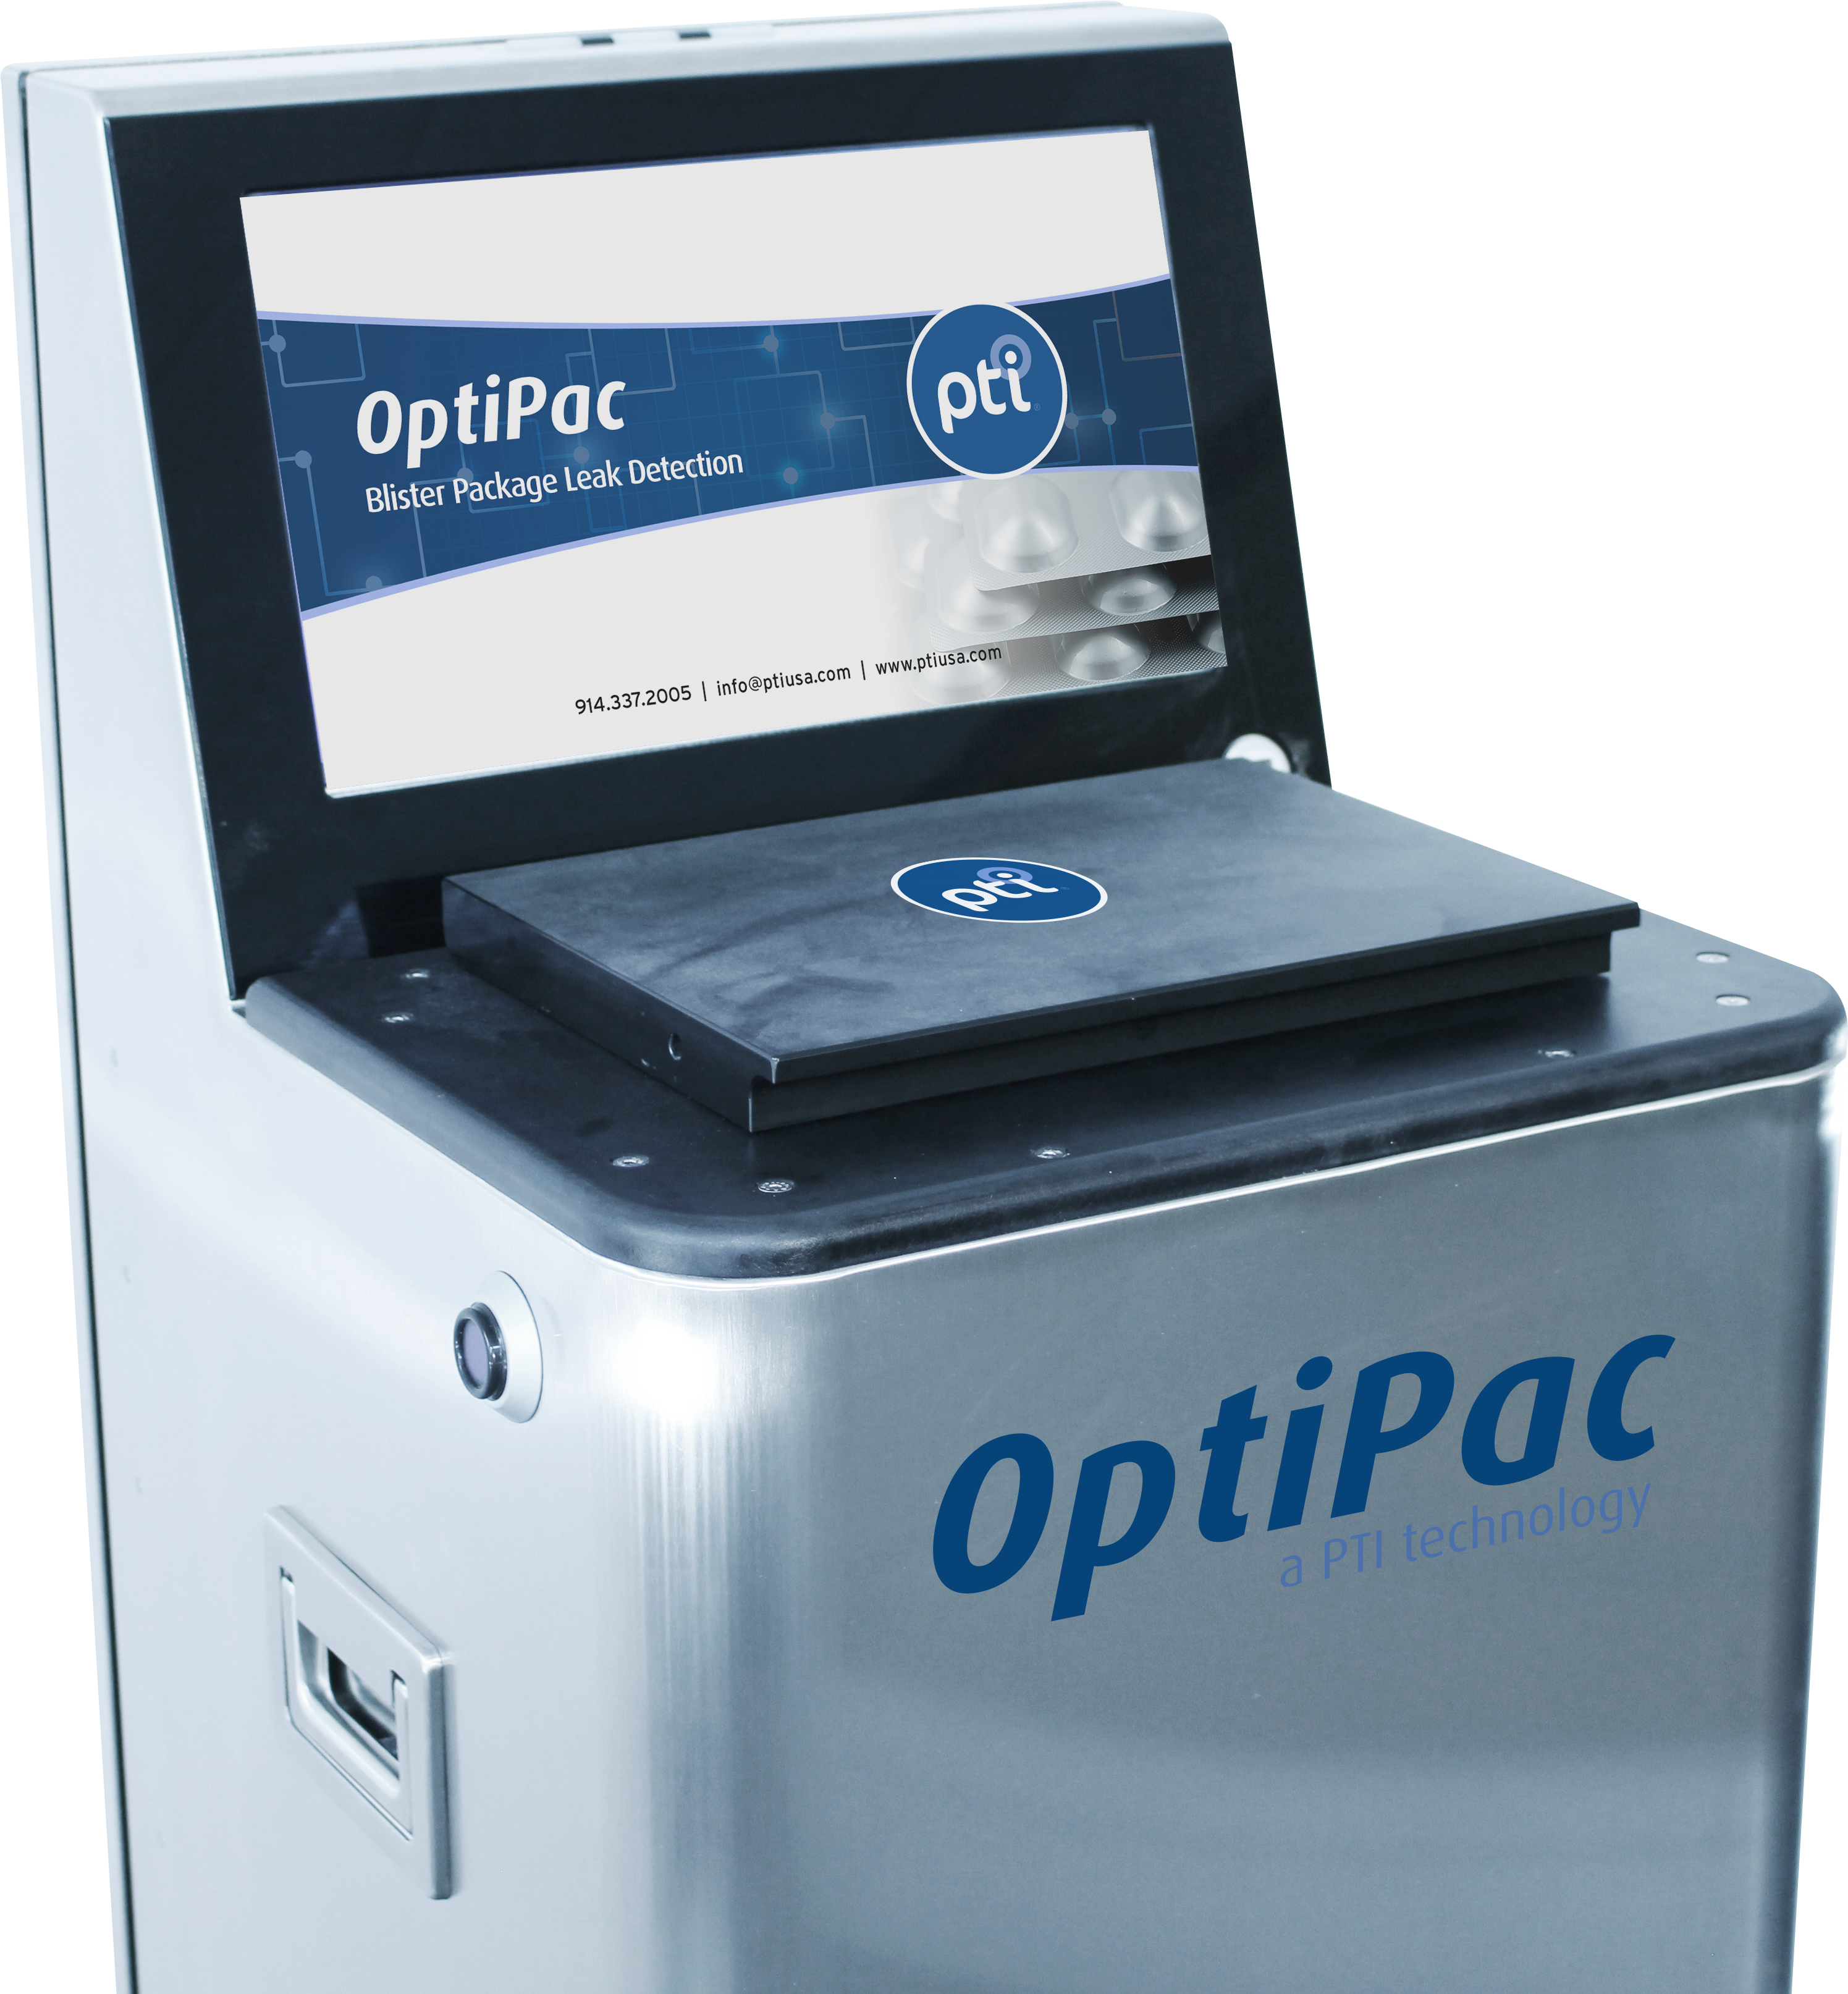 OptiPac Blister Package Leak Detection